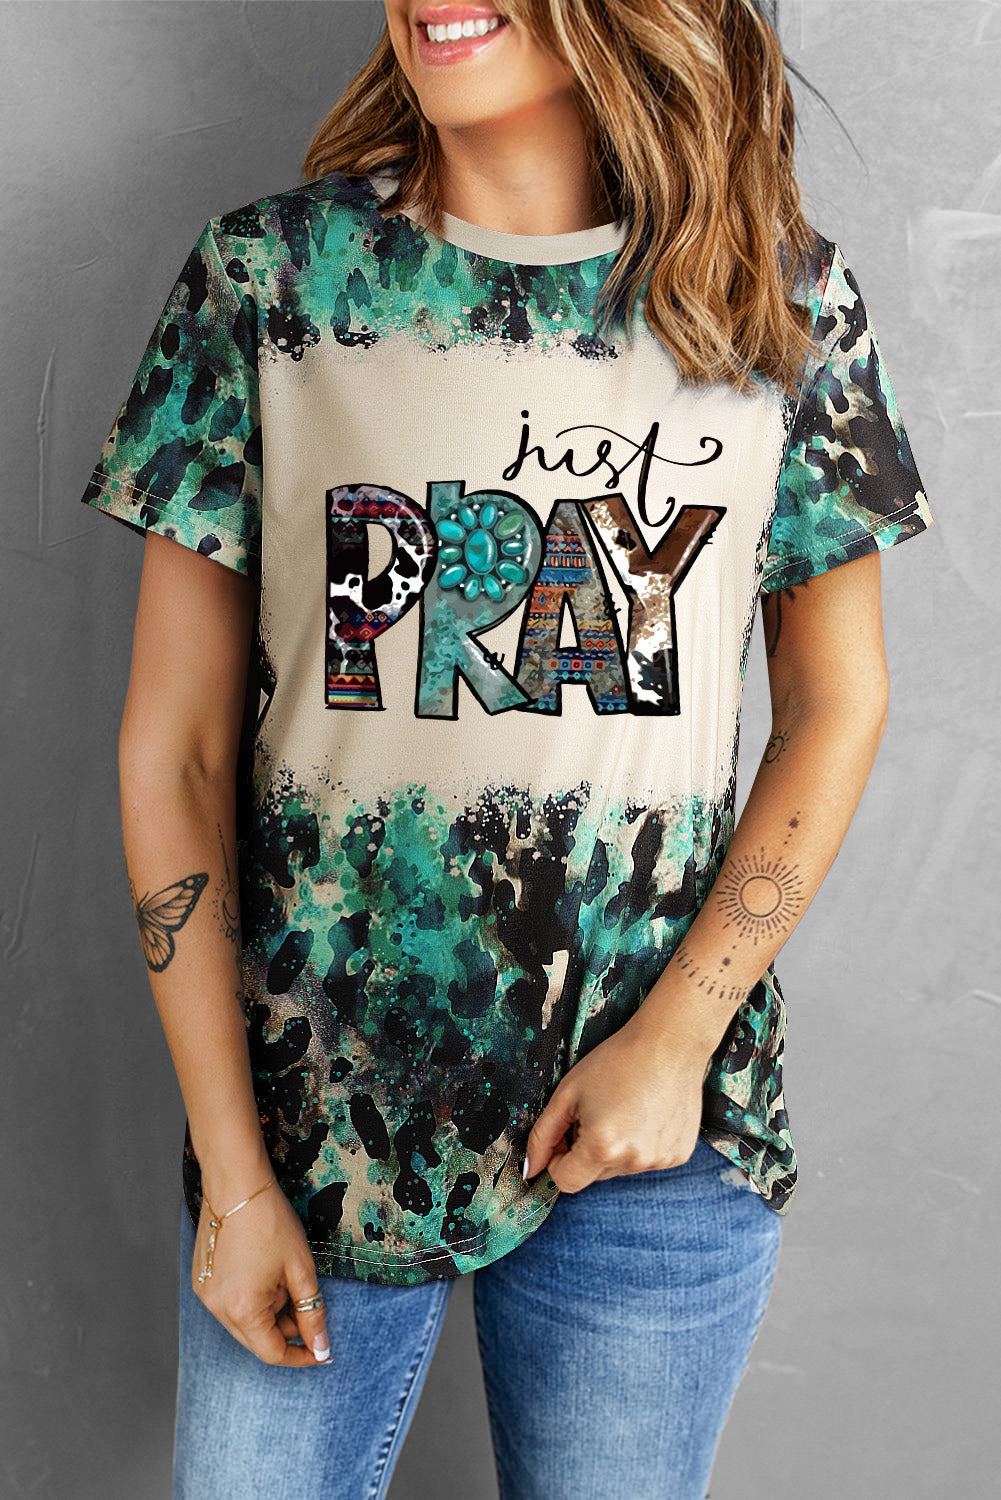 JUST PRAY Graphic Tee Shirt  Krazy Heart Designs Boutique   